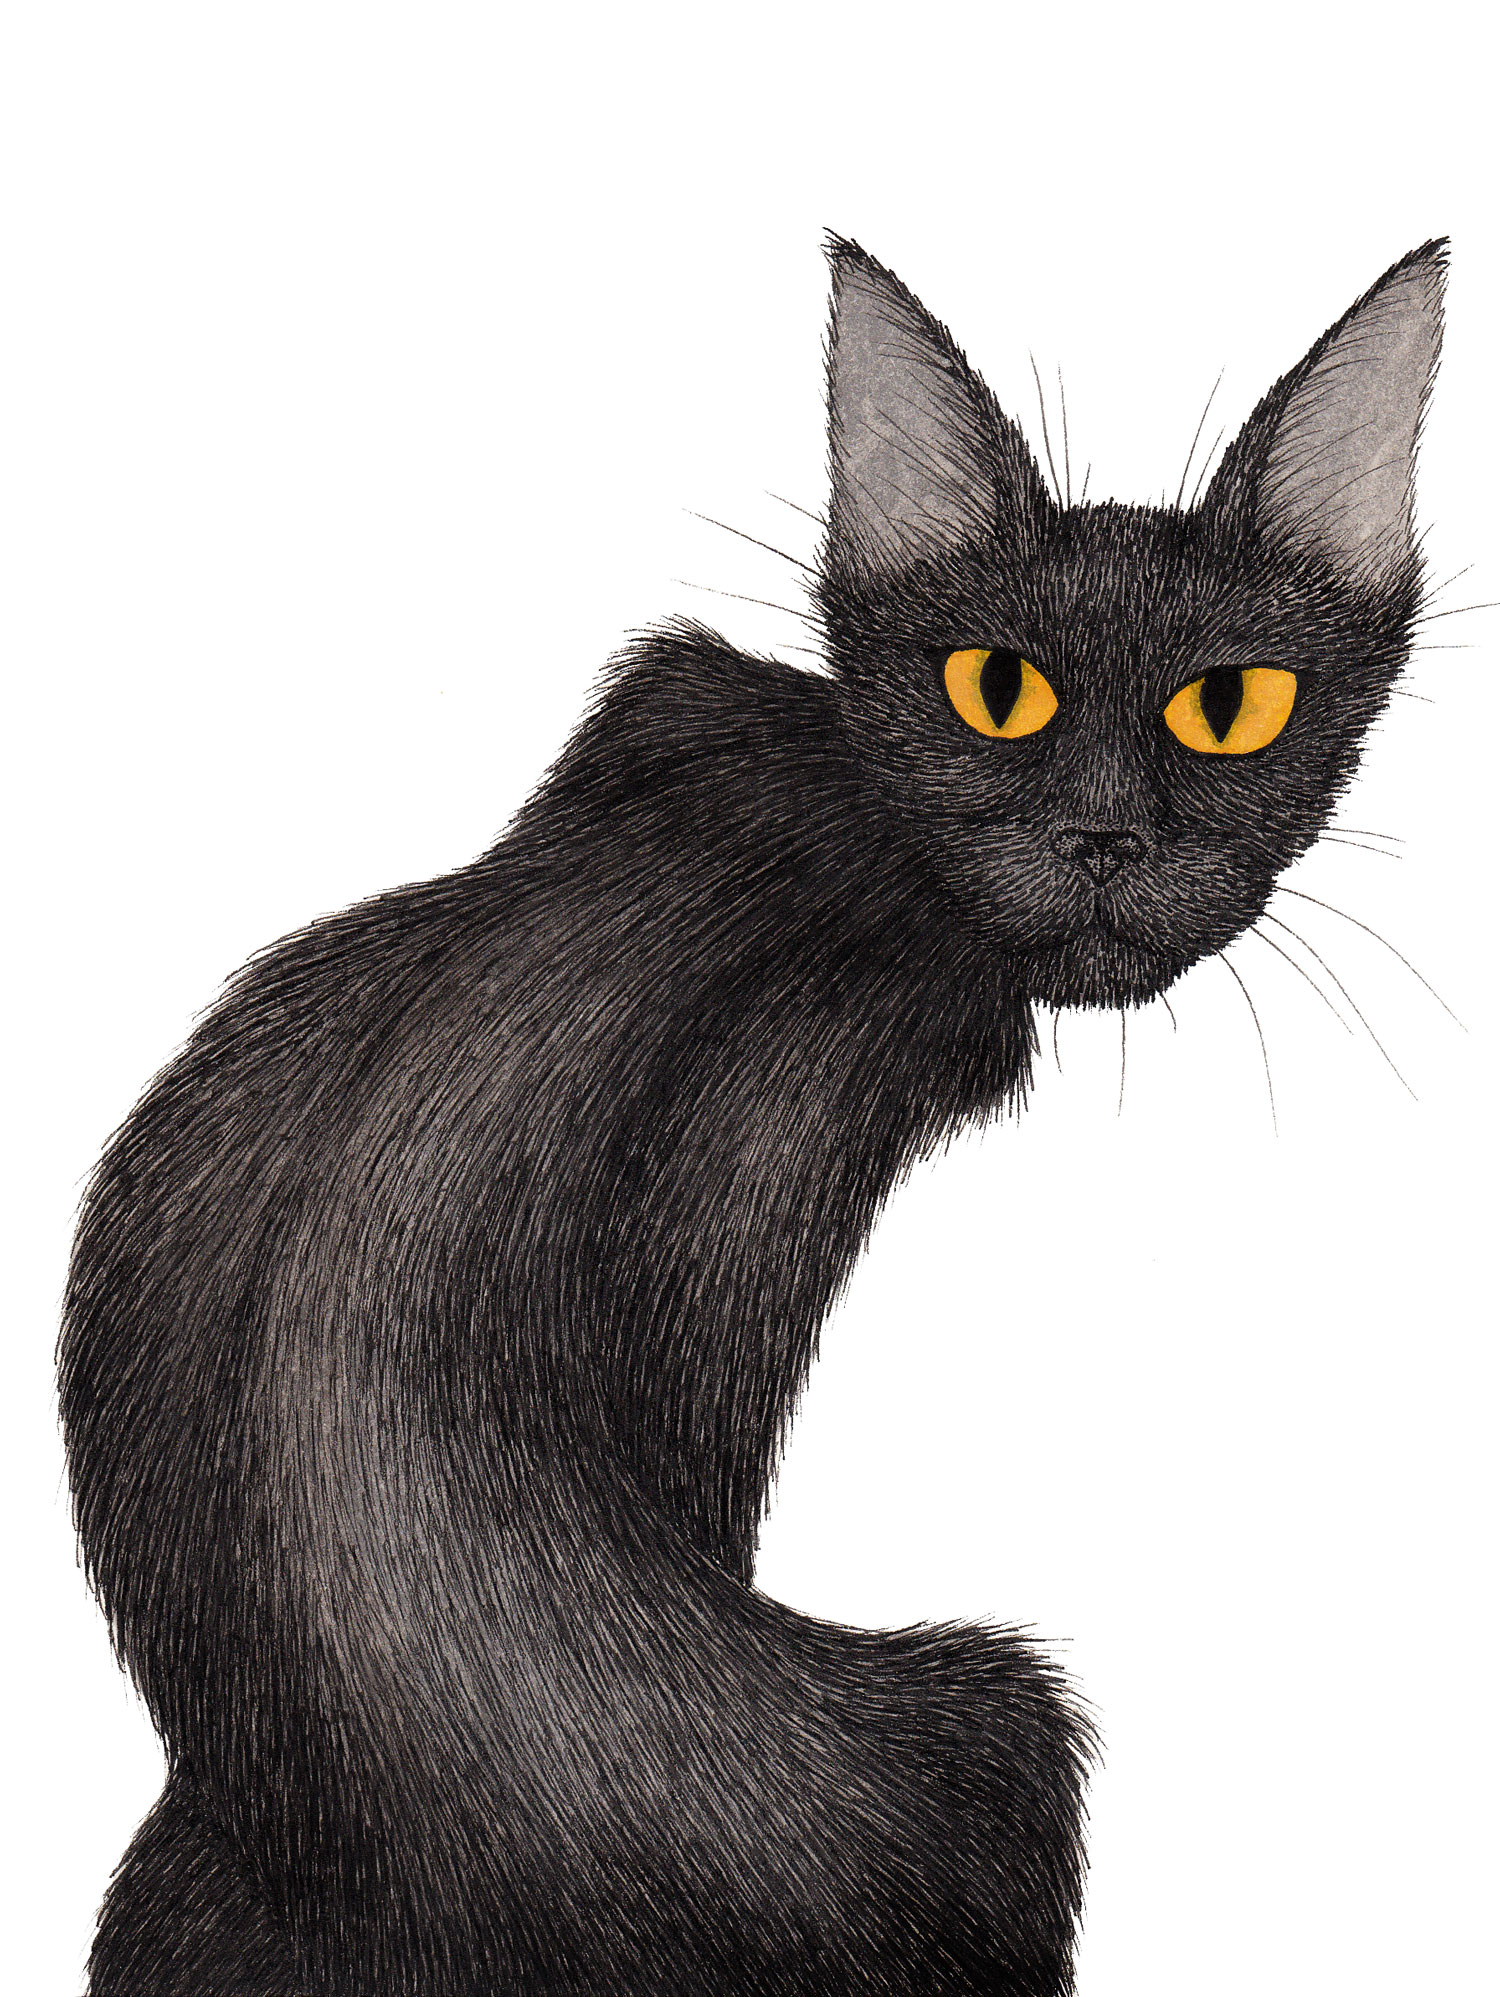 black-cat-yellow-eyes-illustration-matthew-woods.jpg